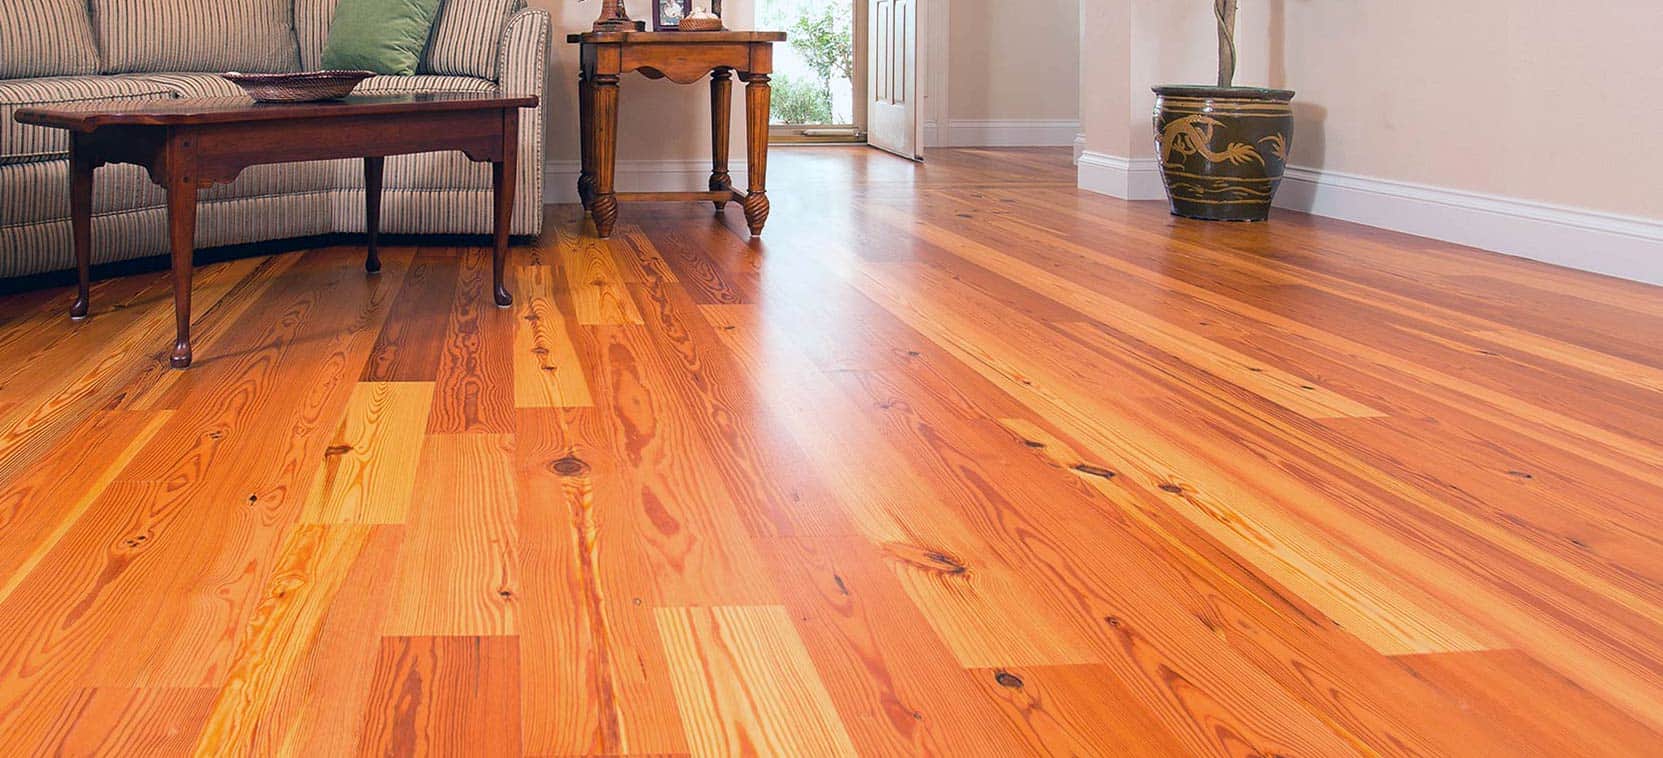 Legacy Heart Pine Vintage Engineered Wood Flooring